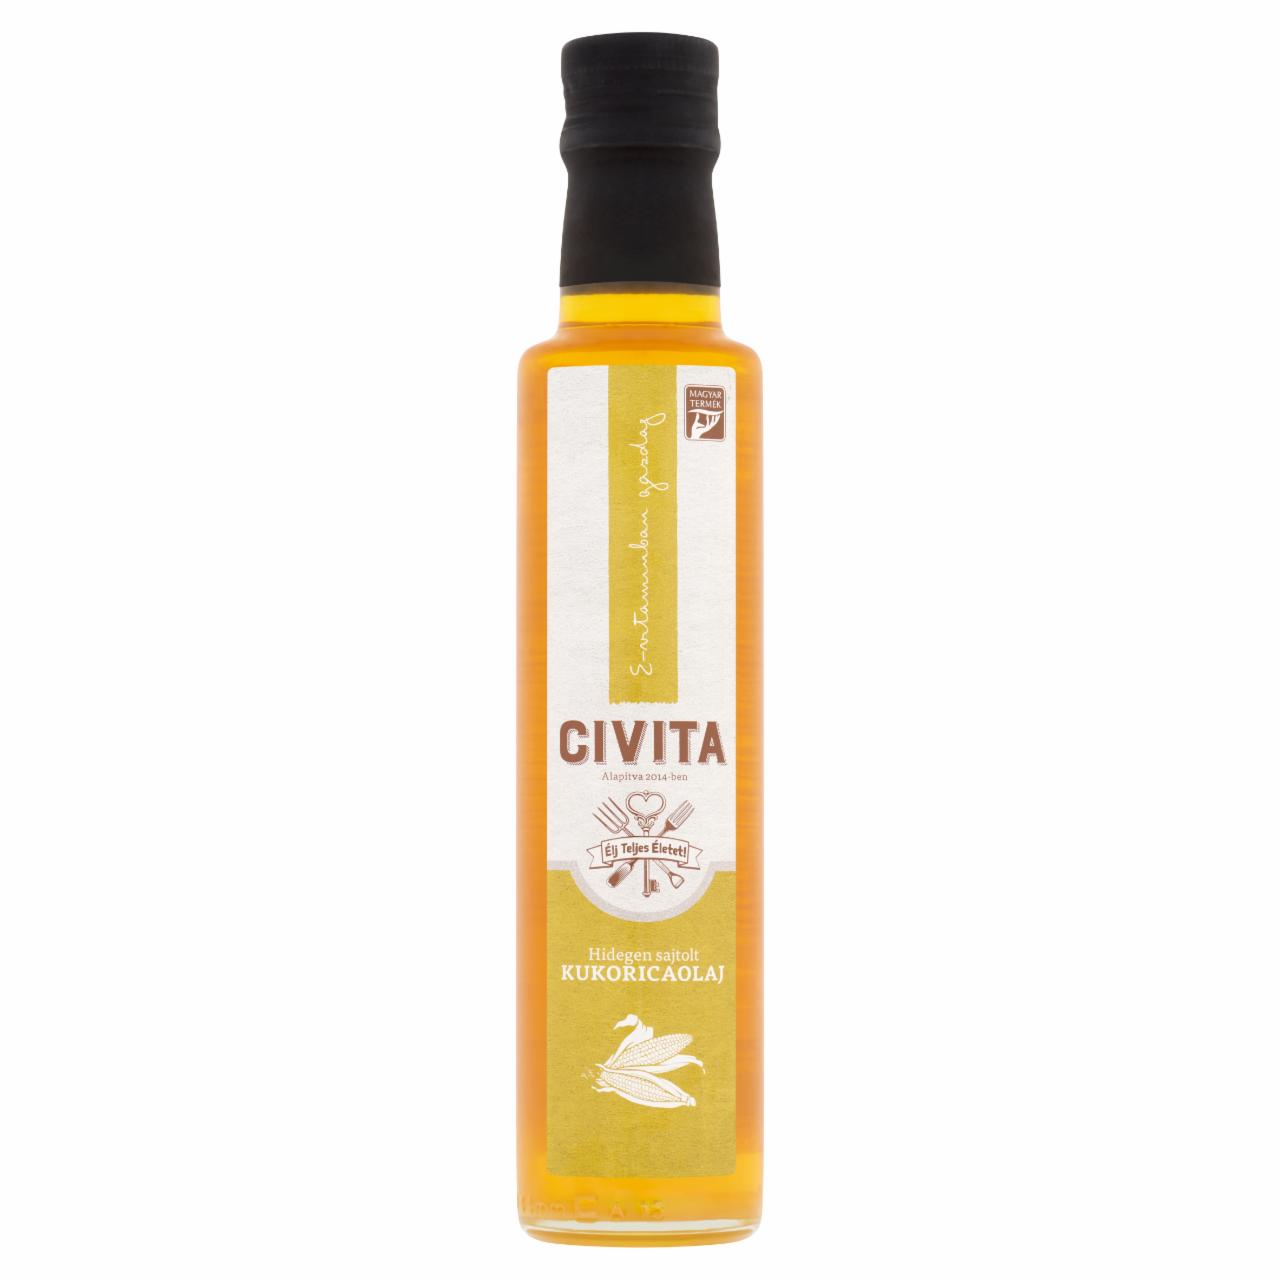 Képek - Civita hidegen sajtolt kukoricaolaj 250 ml